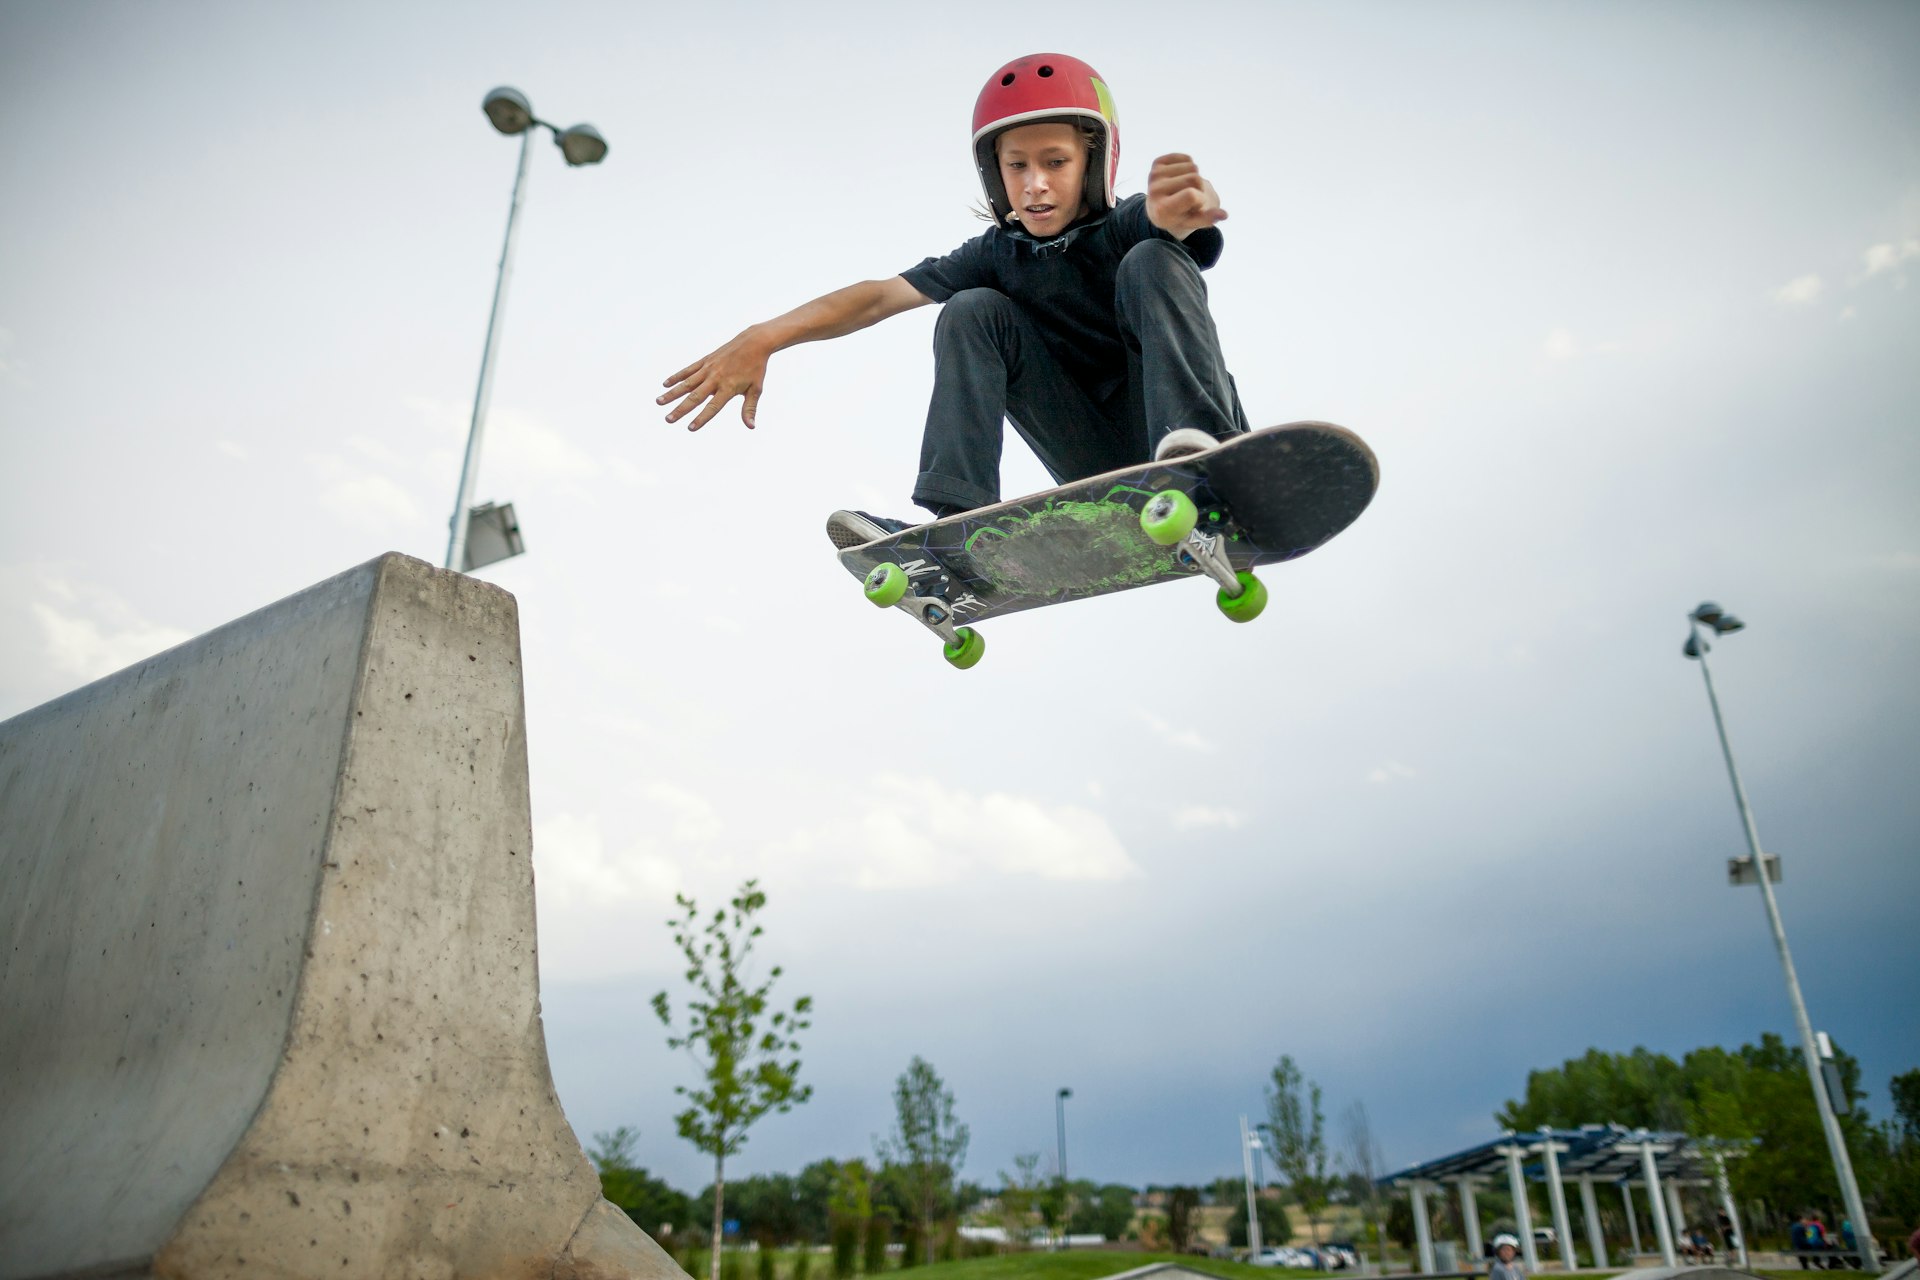 A kid airborne on a skateboard at Confluence Park, Denver